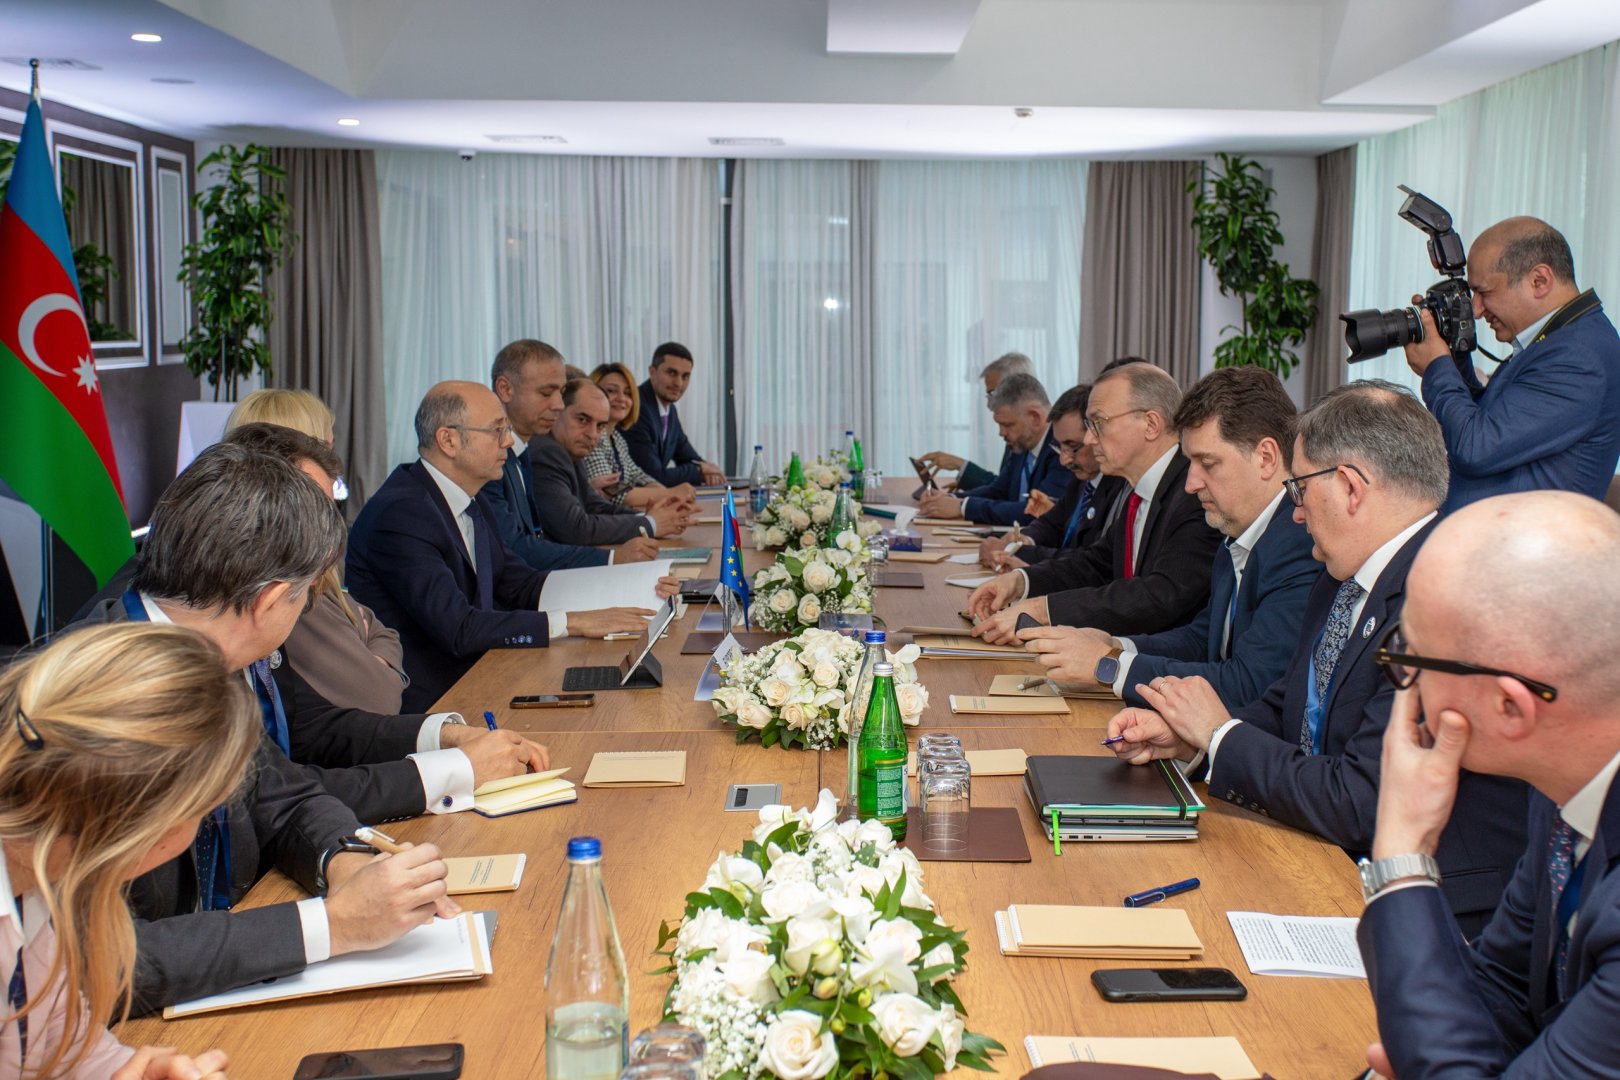 Azerbaijan and WindEurope sign memorandum of understanding (PHOTO)